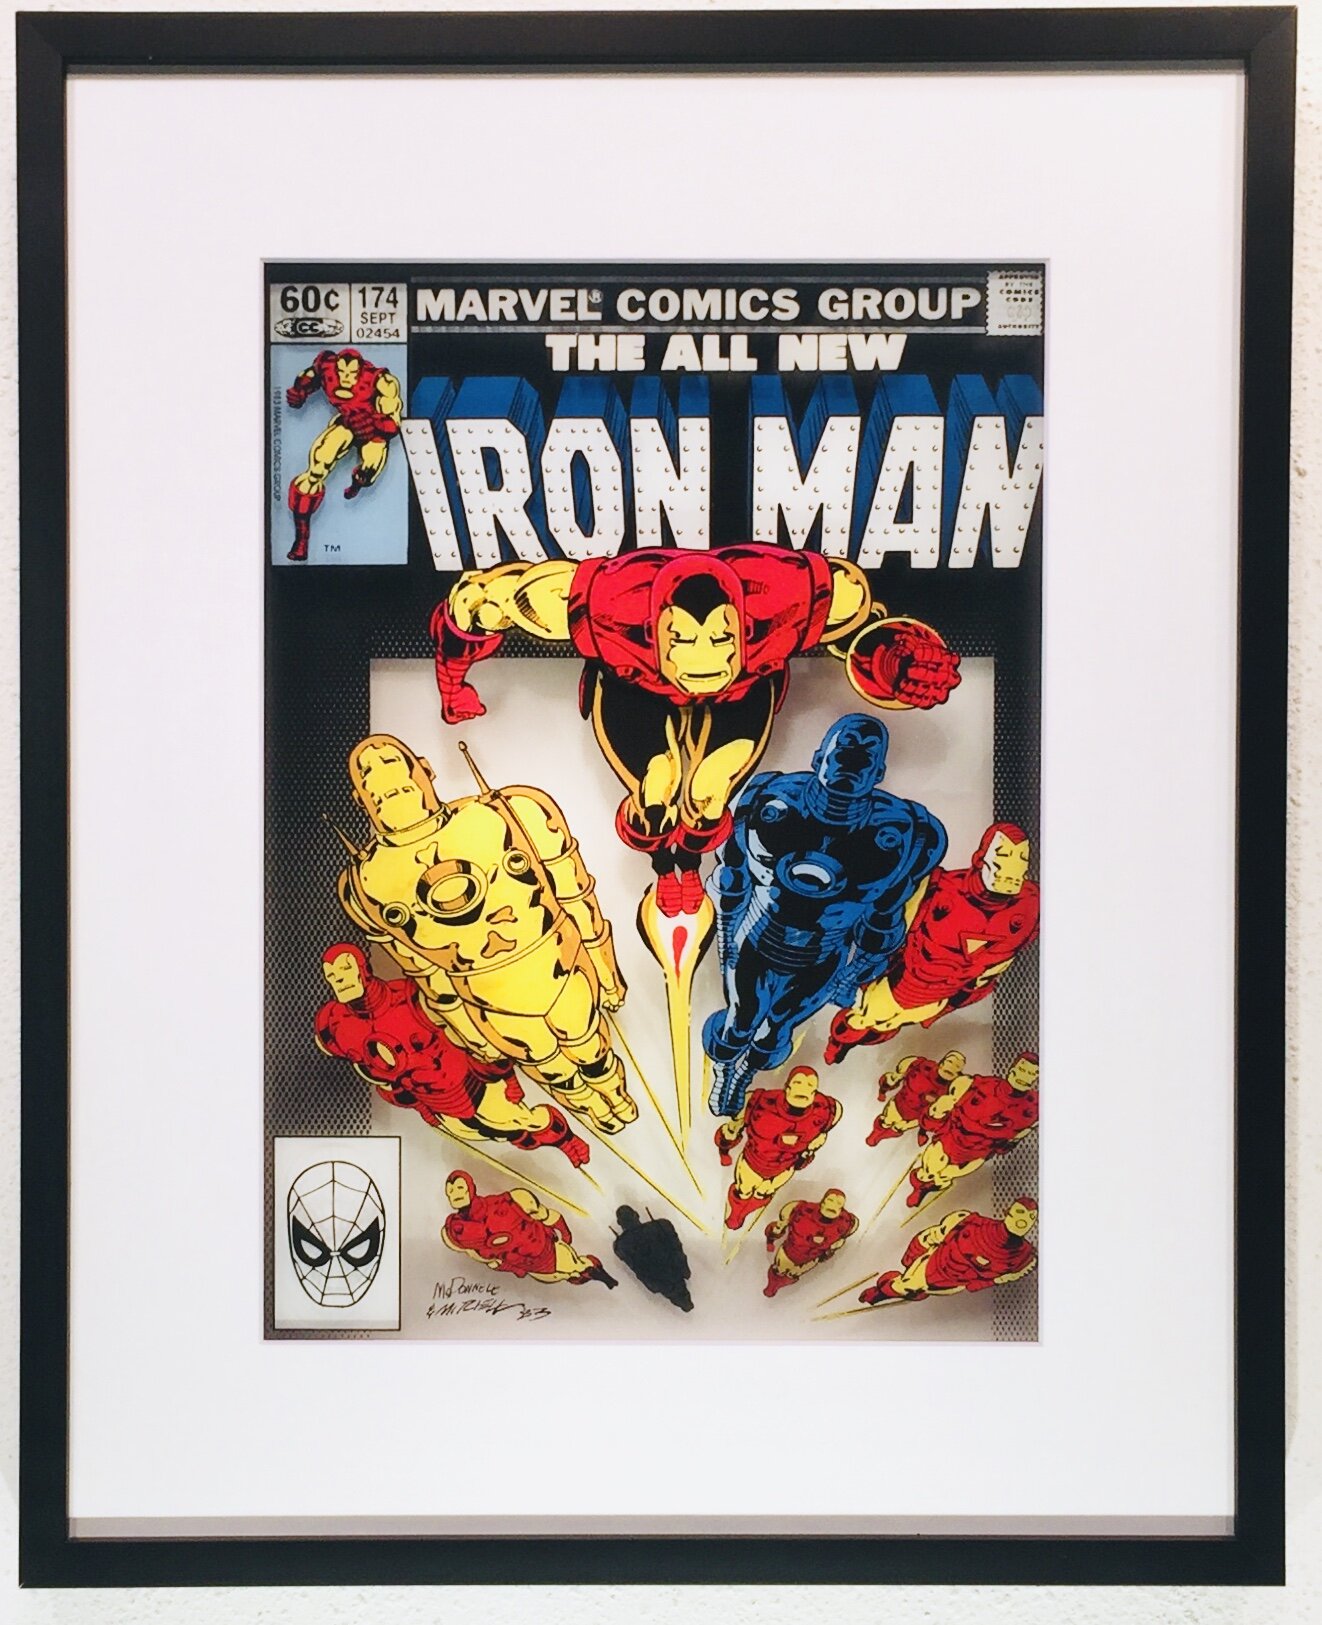 Iron Man Vol. 1, No. 174